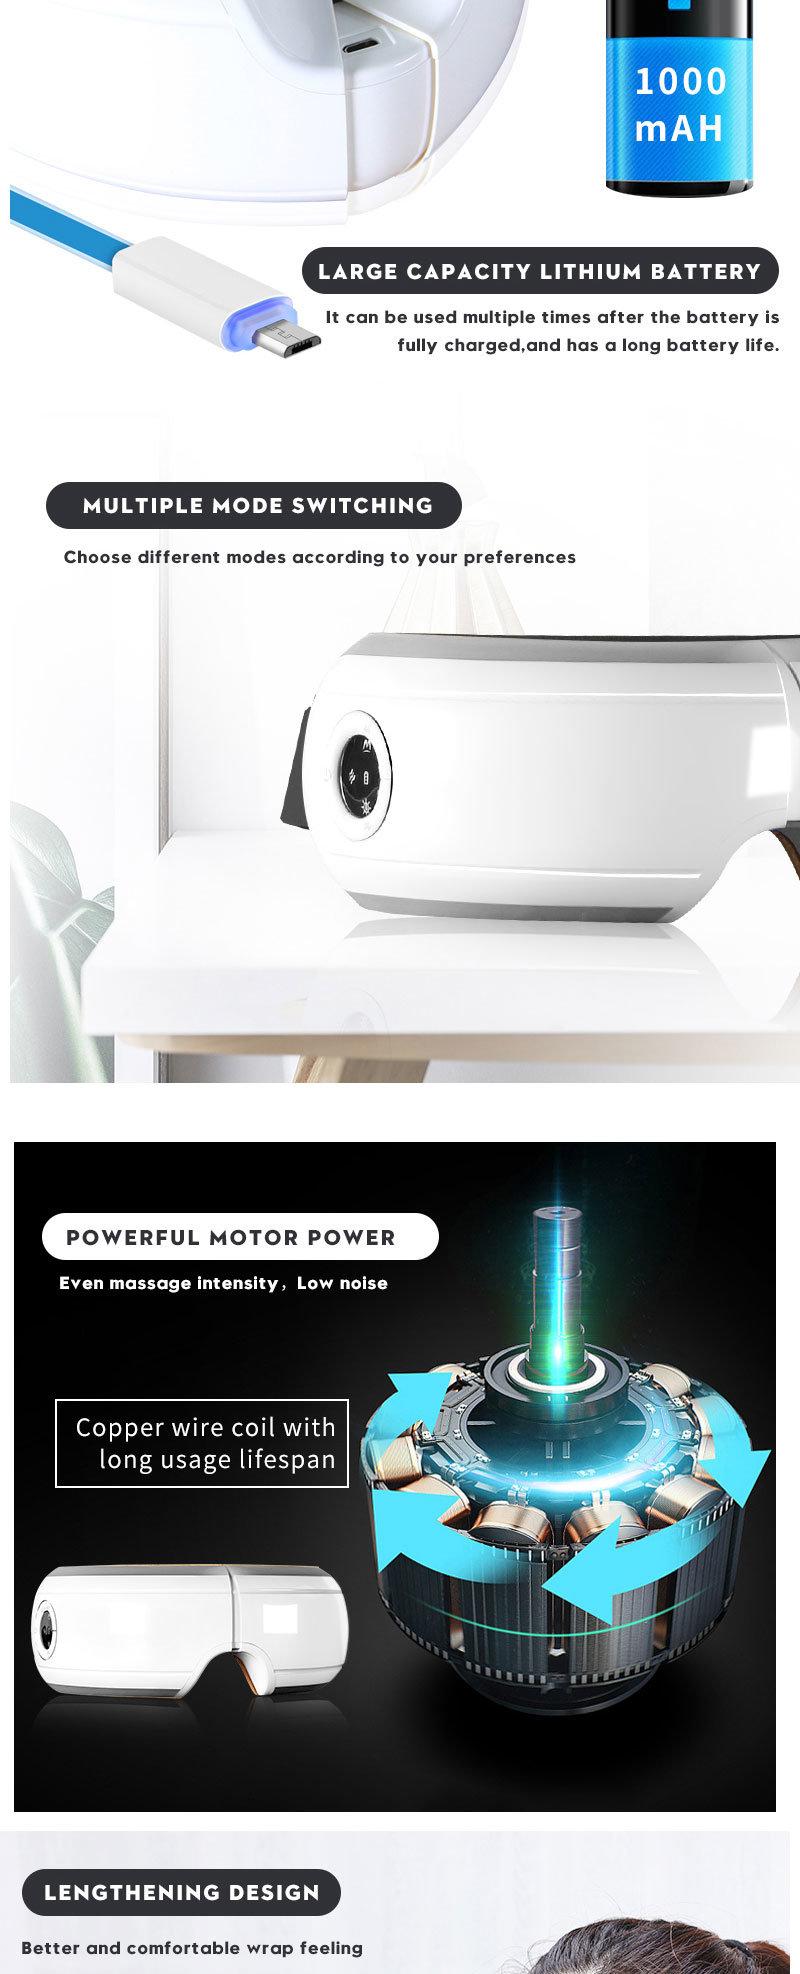 Hezheng Mini Eye Care Heated Vibrating Wireless Air Pressure Eye Beauty Massager